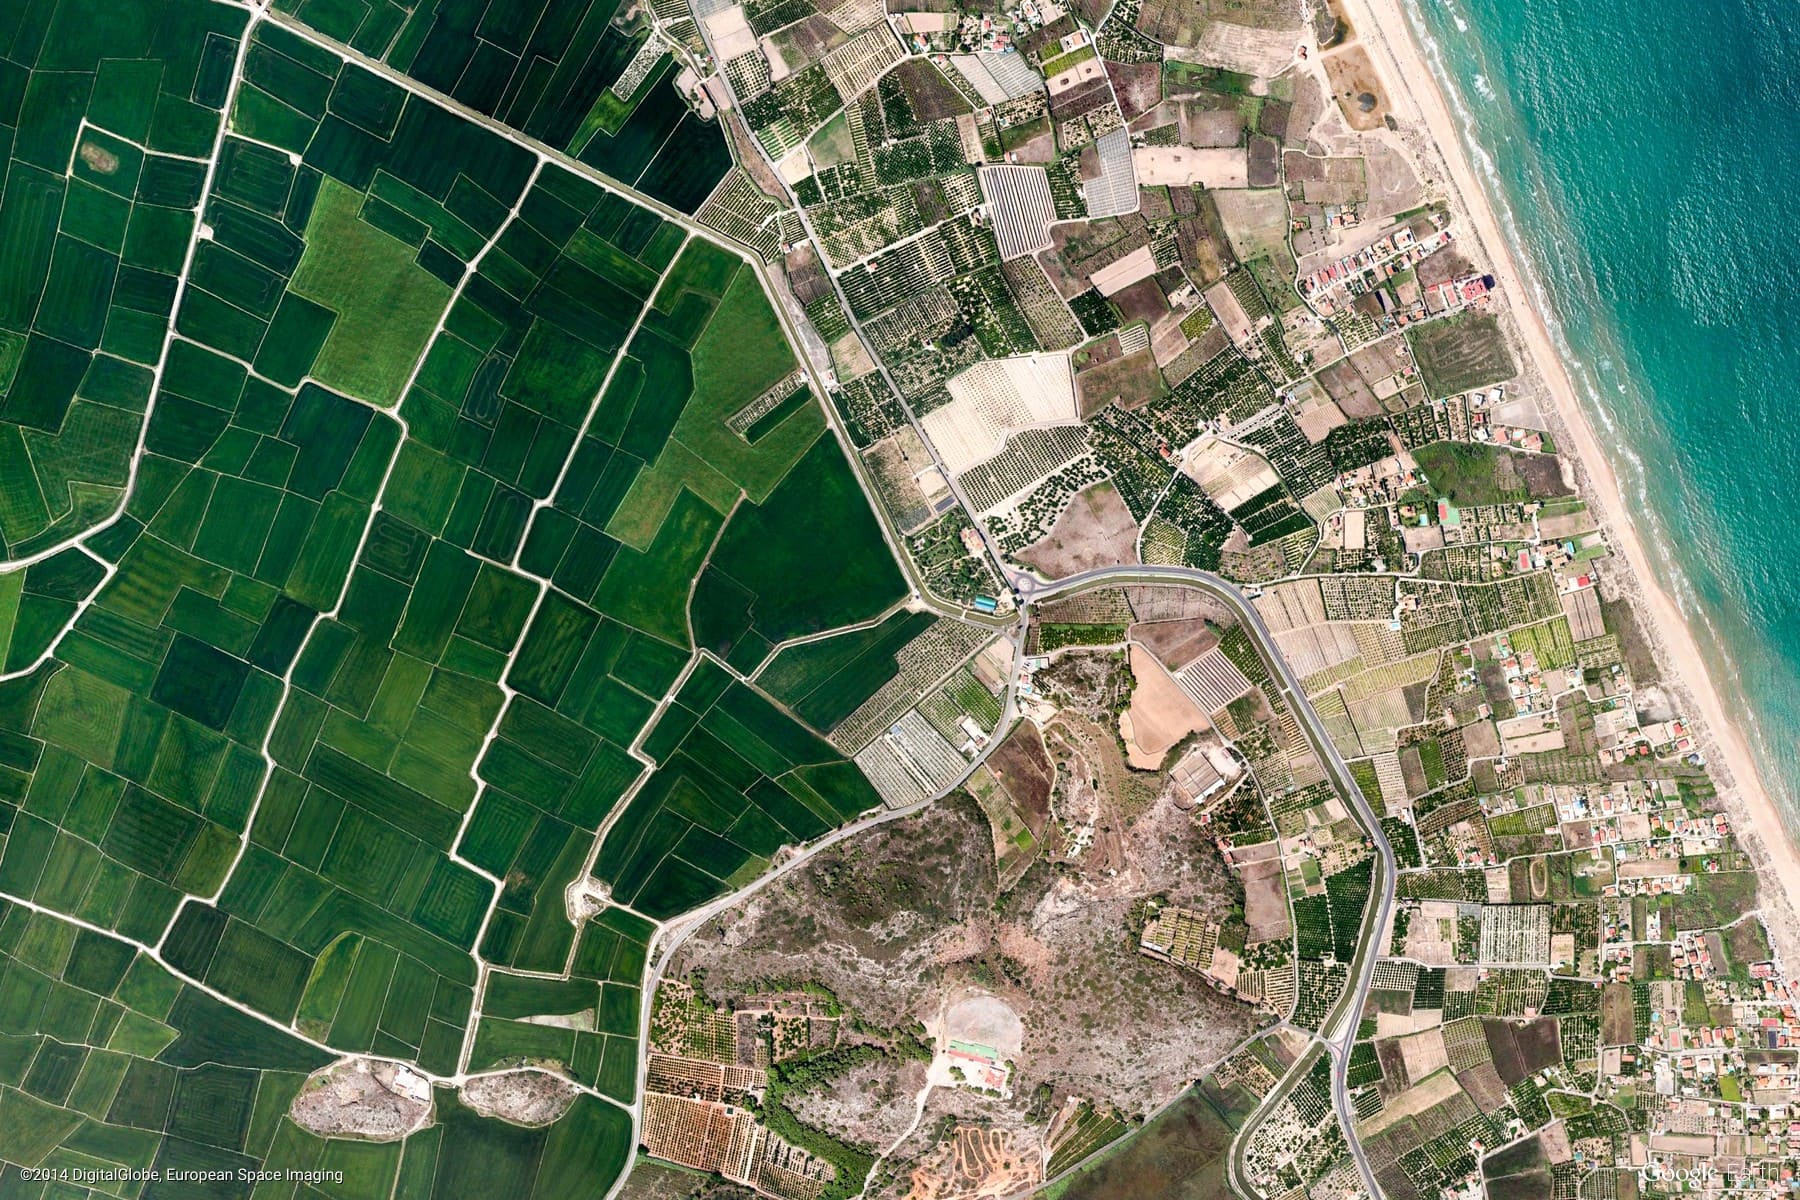 Google Earth cumple 10 años